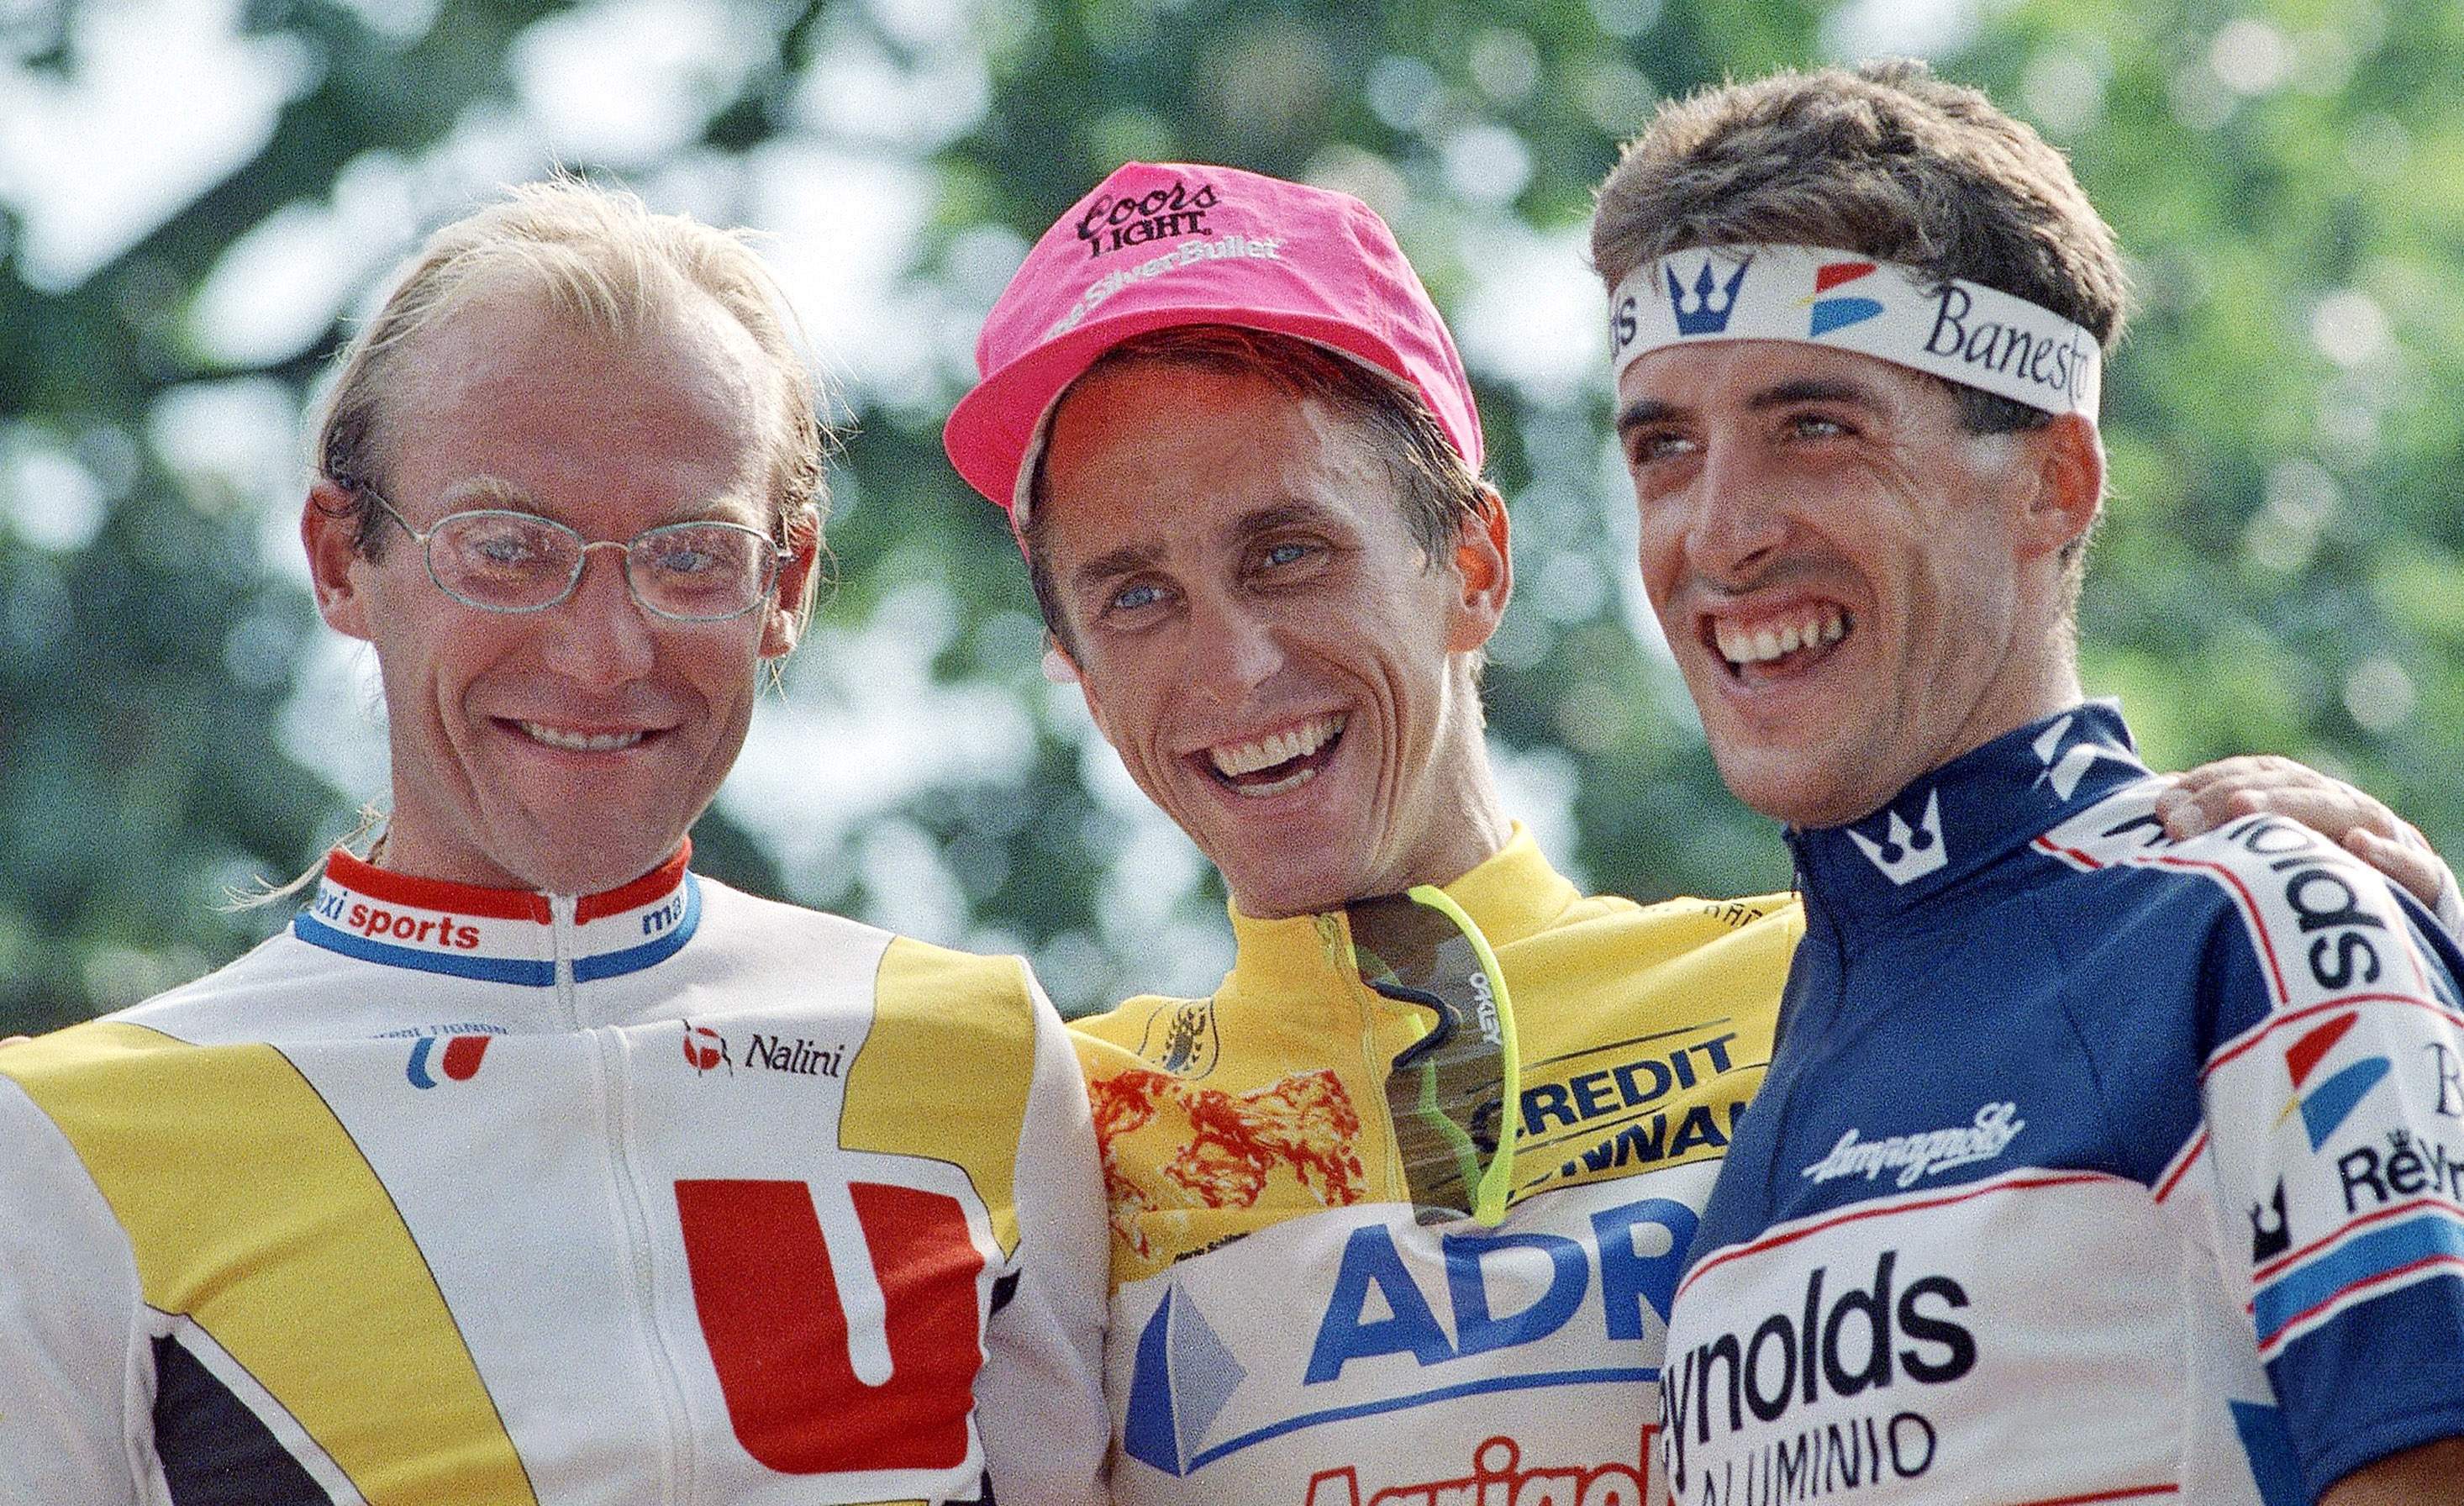 Lemond, between Fignon and Perico on the Tour podium.